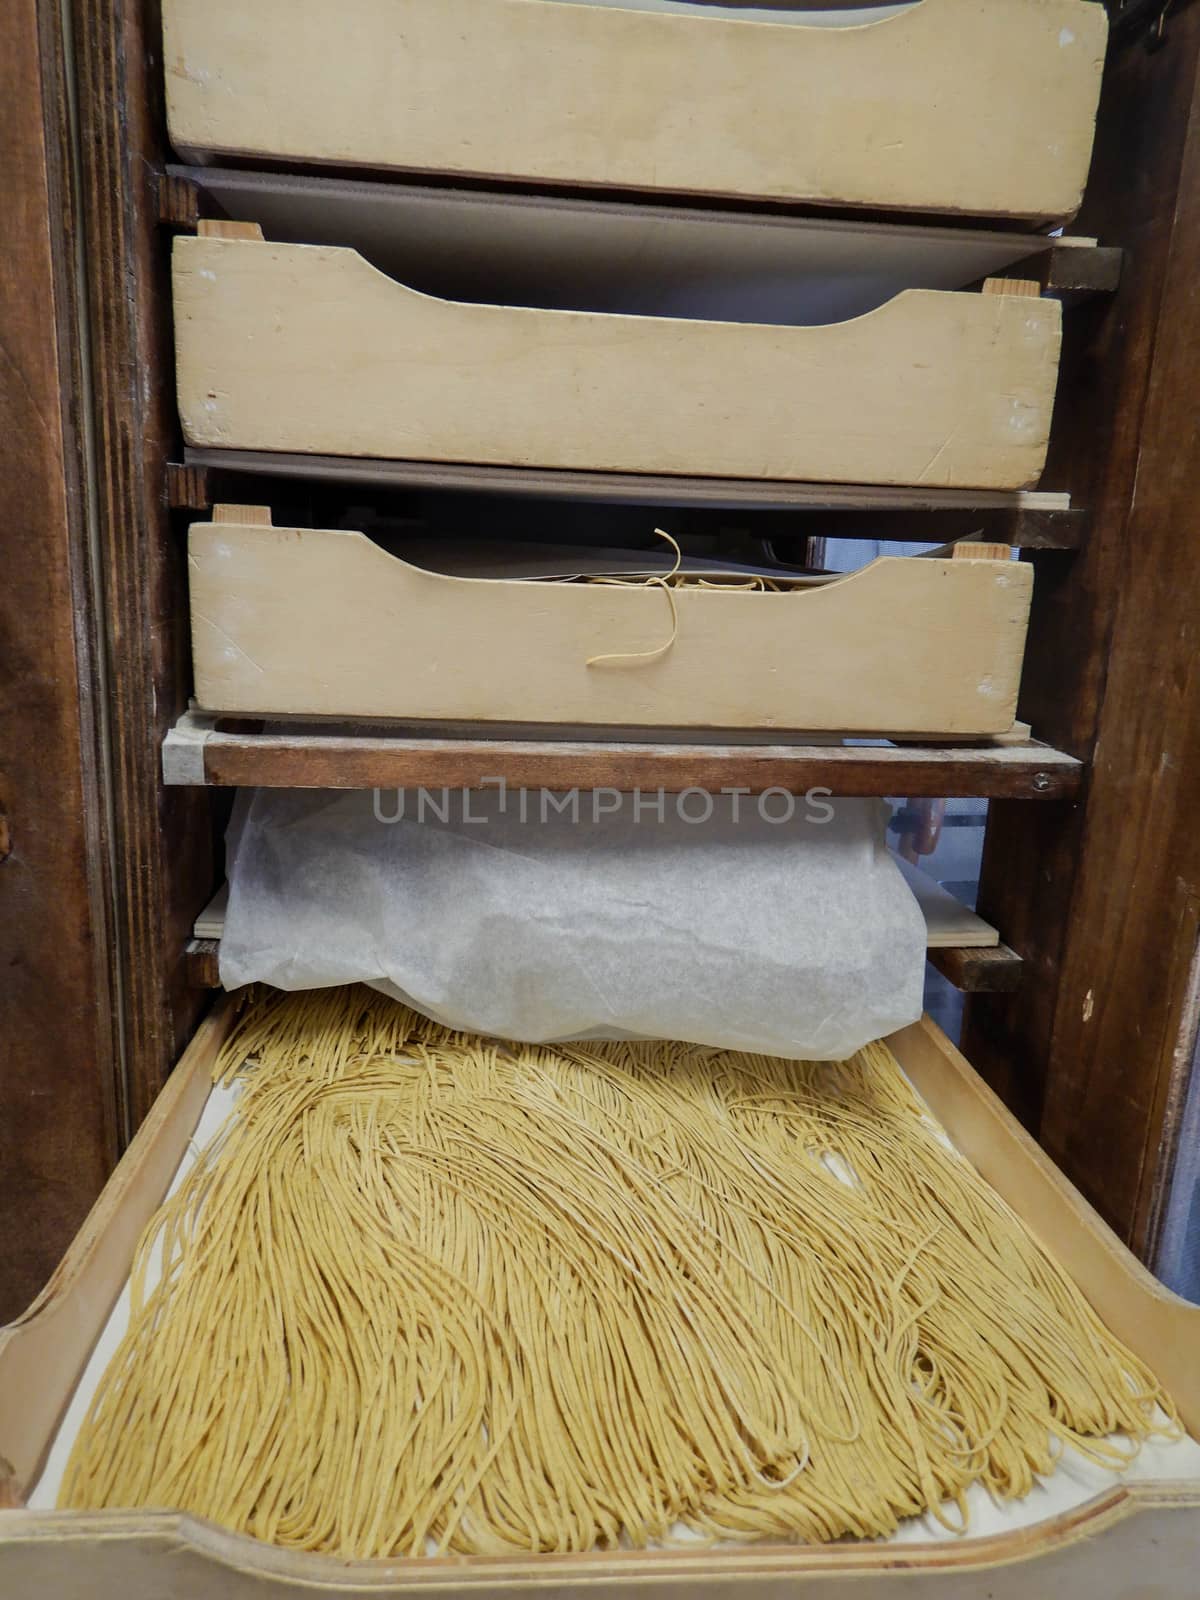 Tajarin preparation: typical pasta of Piedmont, Italy